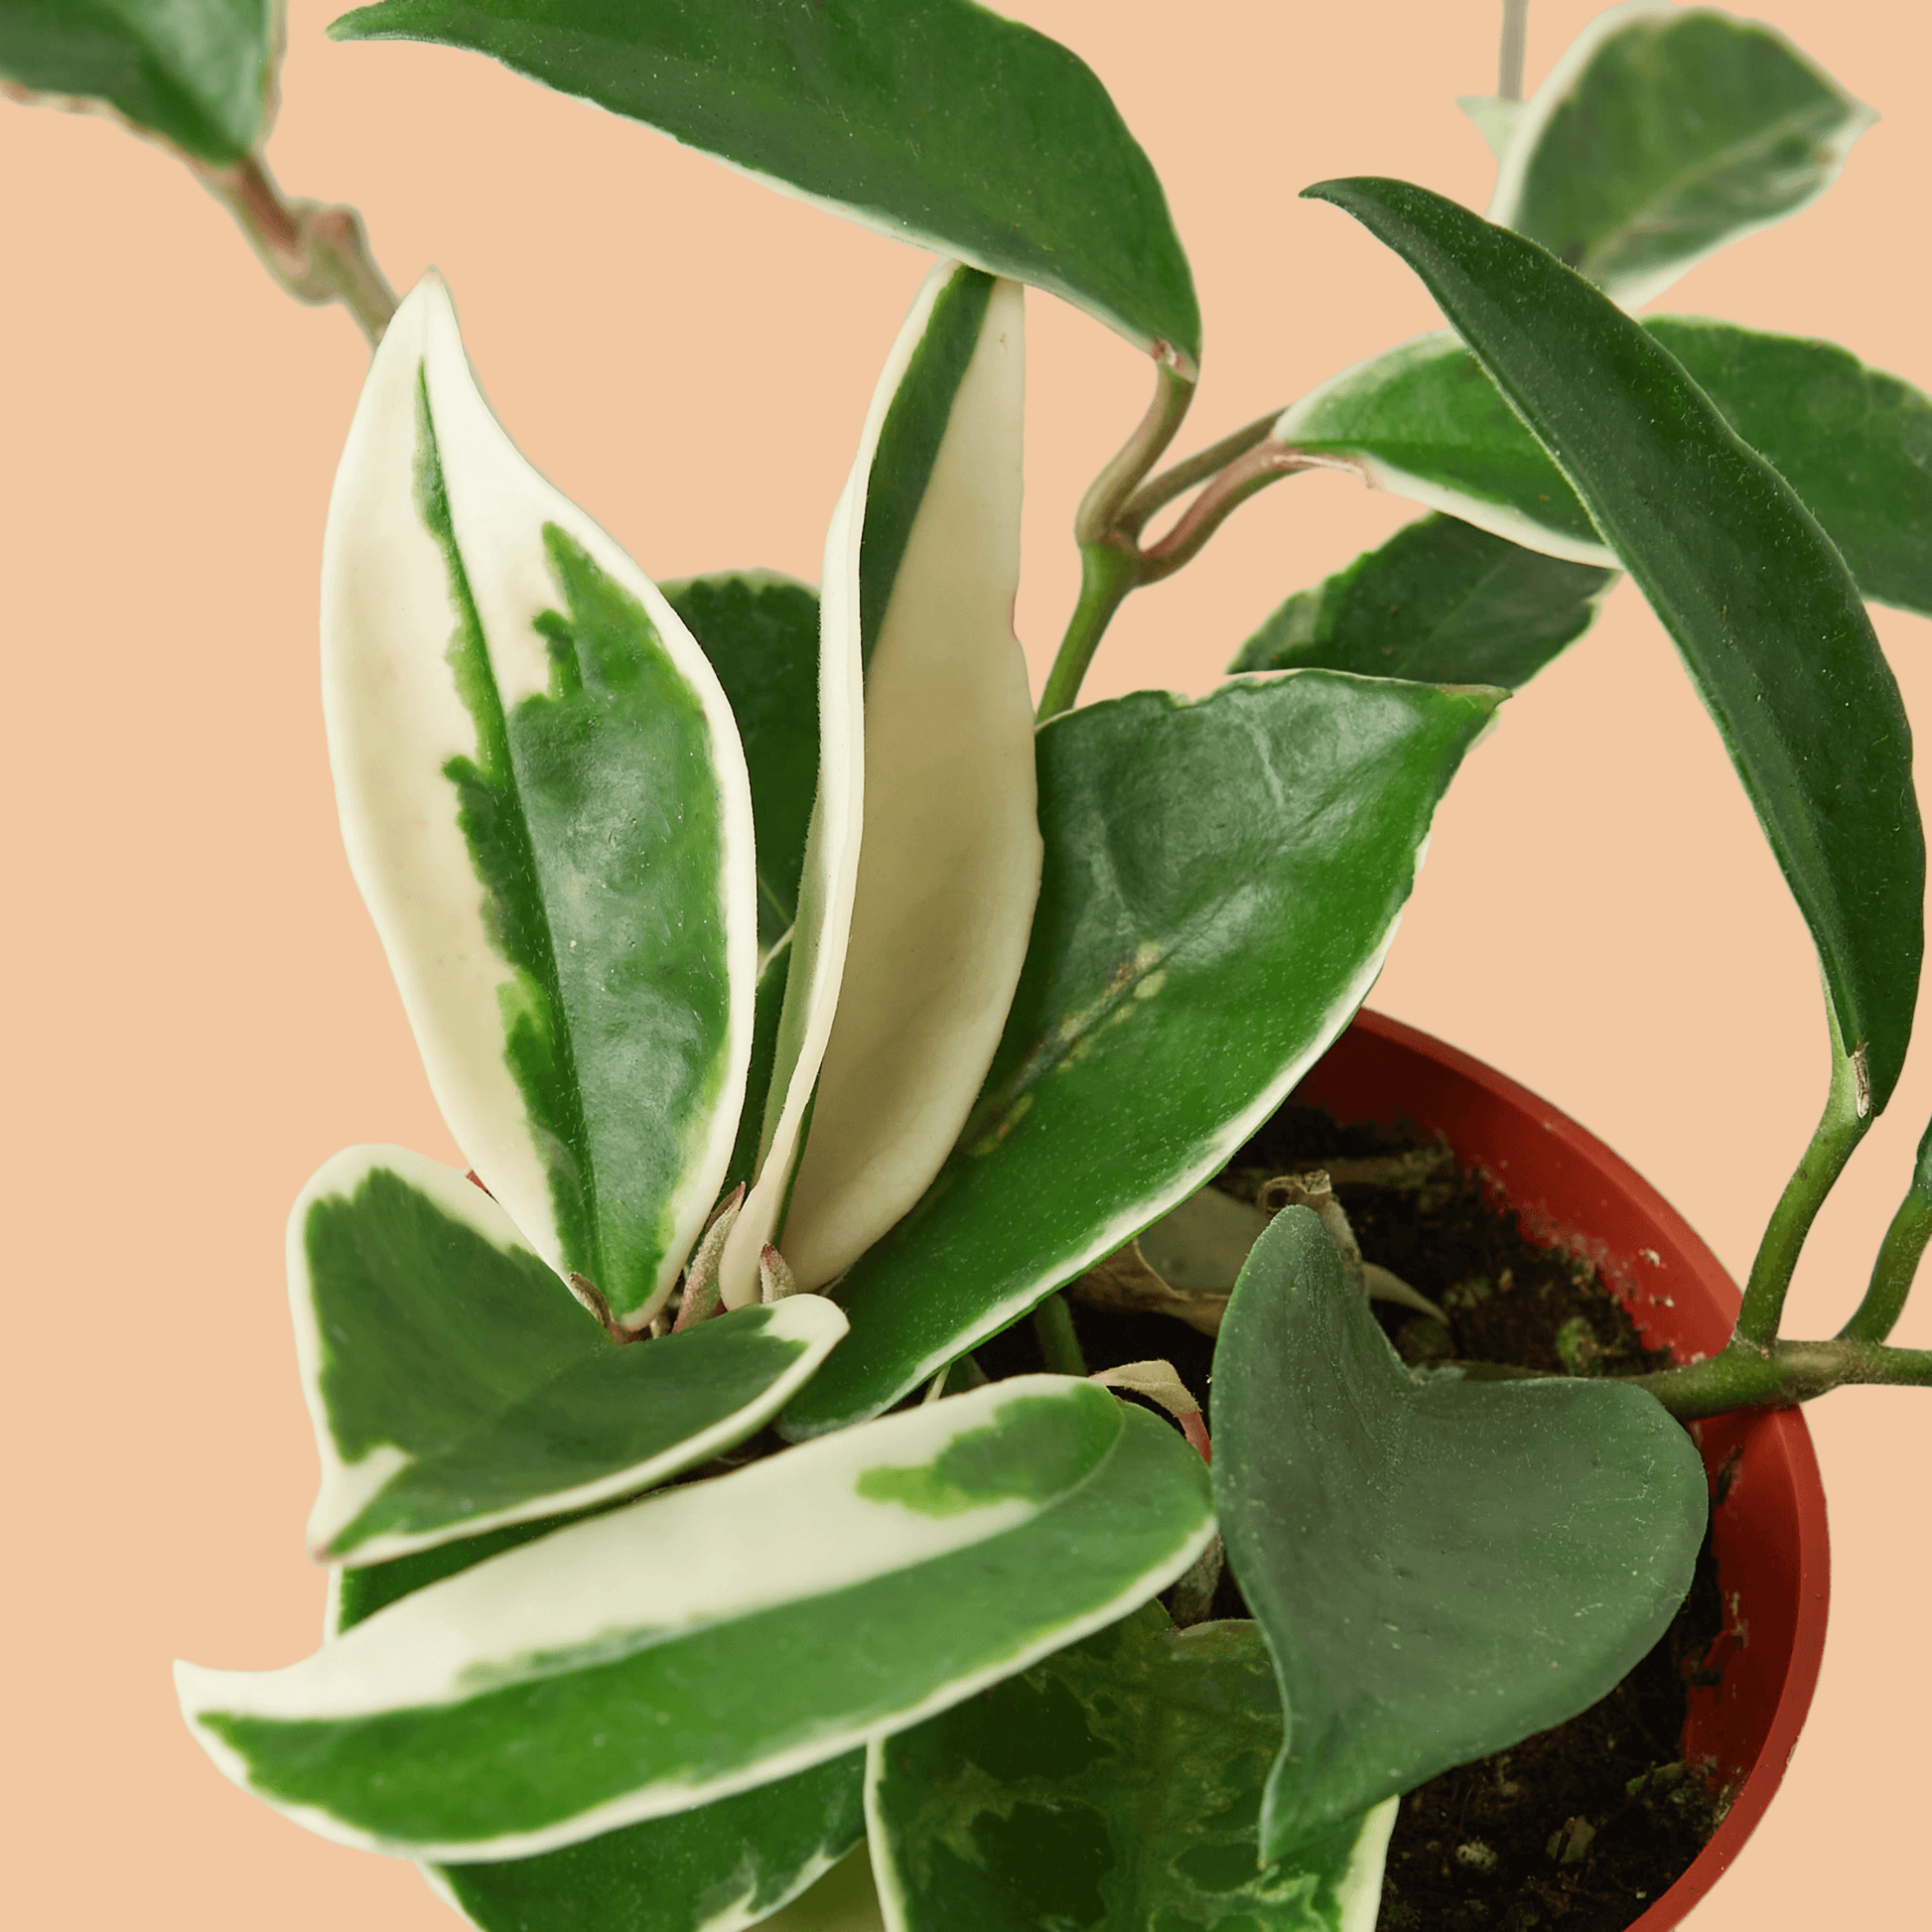 Hoya Carnosa Krimson Princess - The Leafy Branch